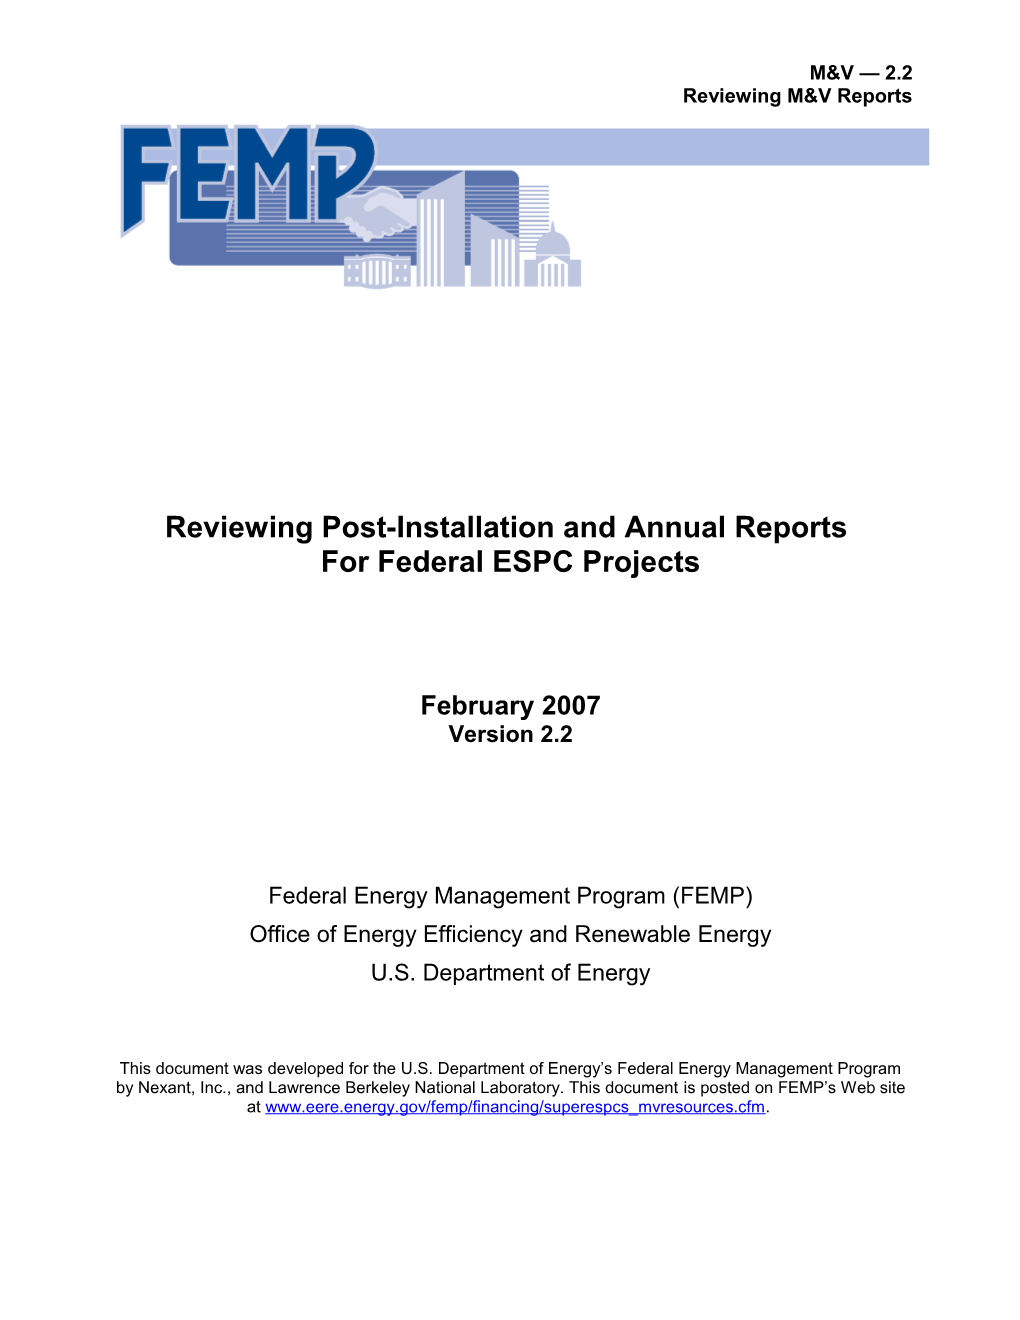 FEMP M&V Annual Report Review Template